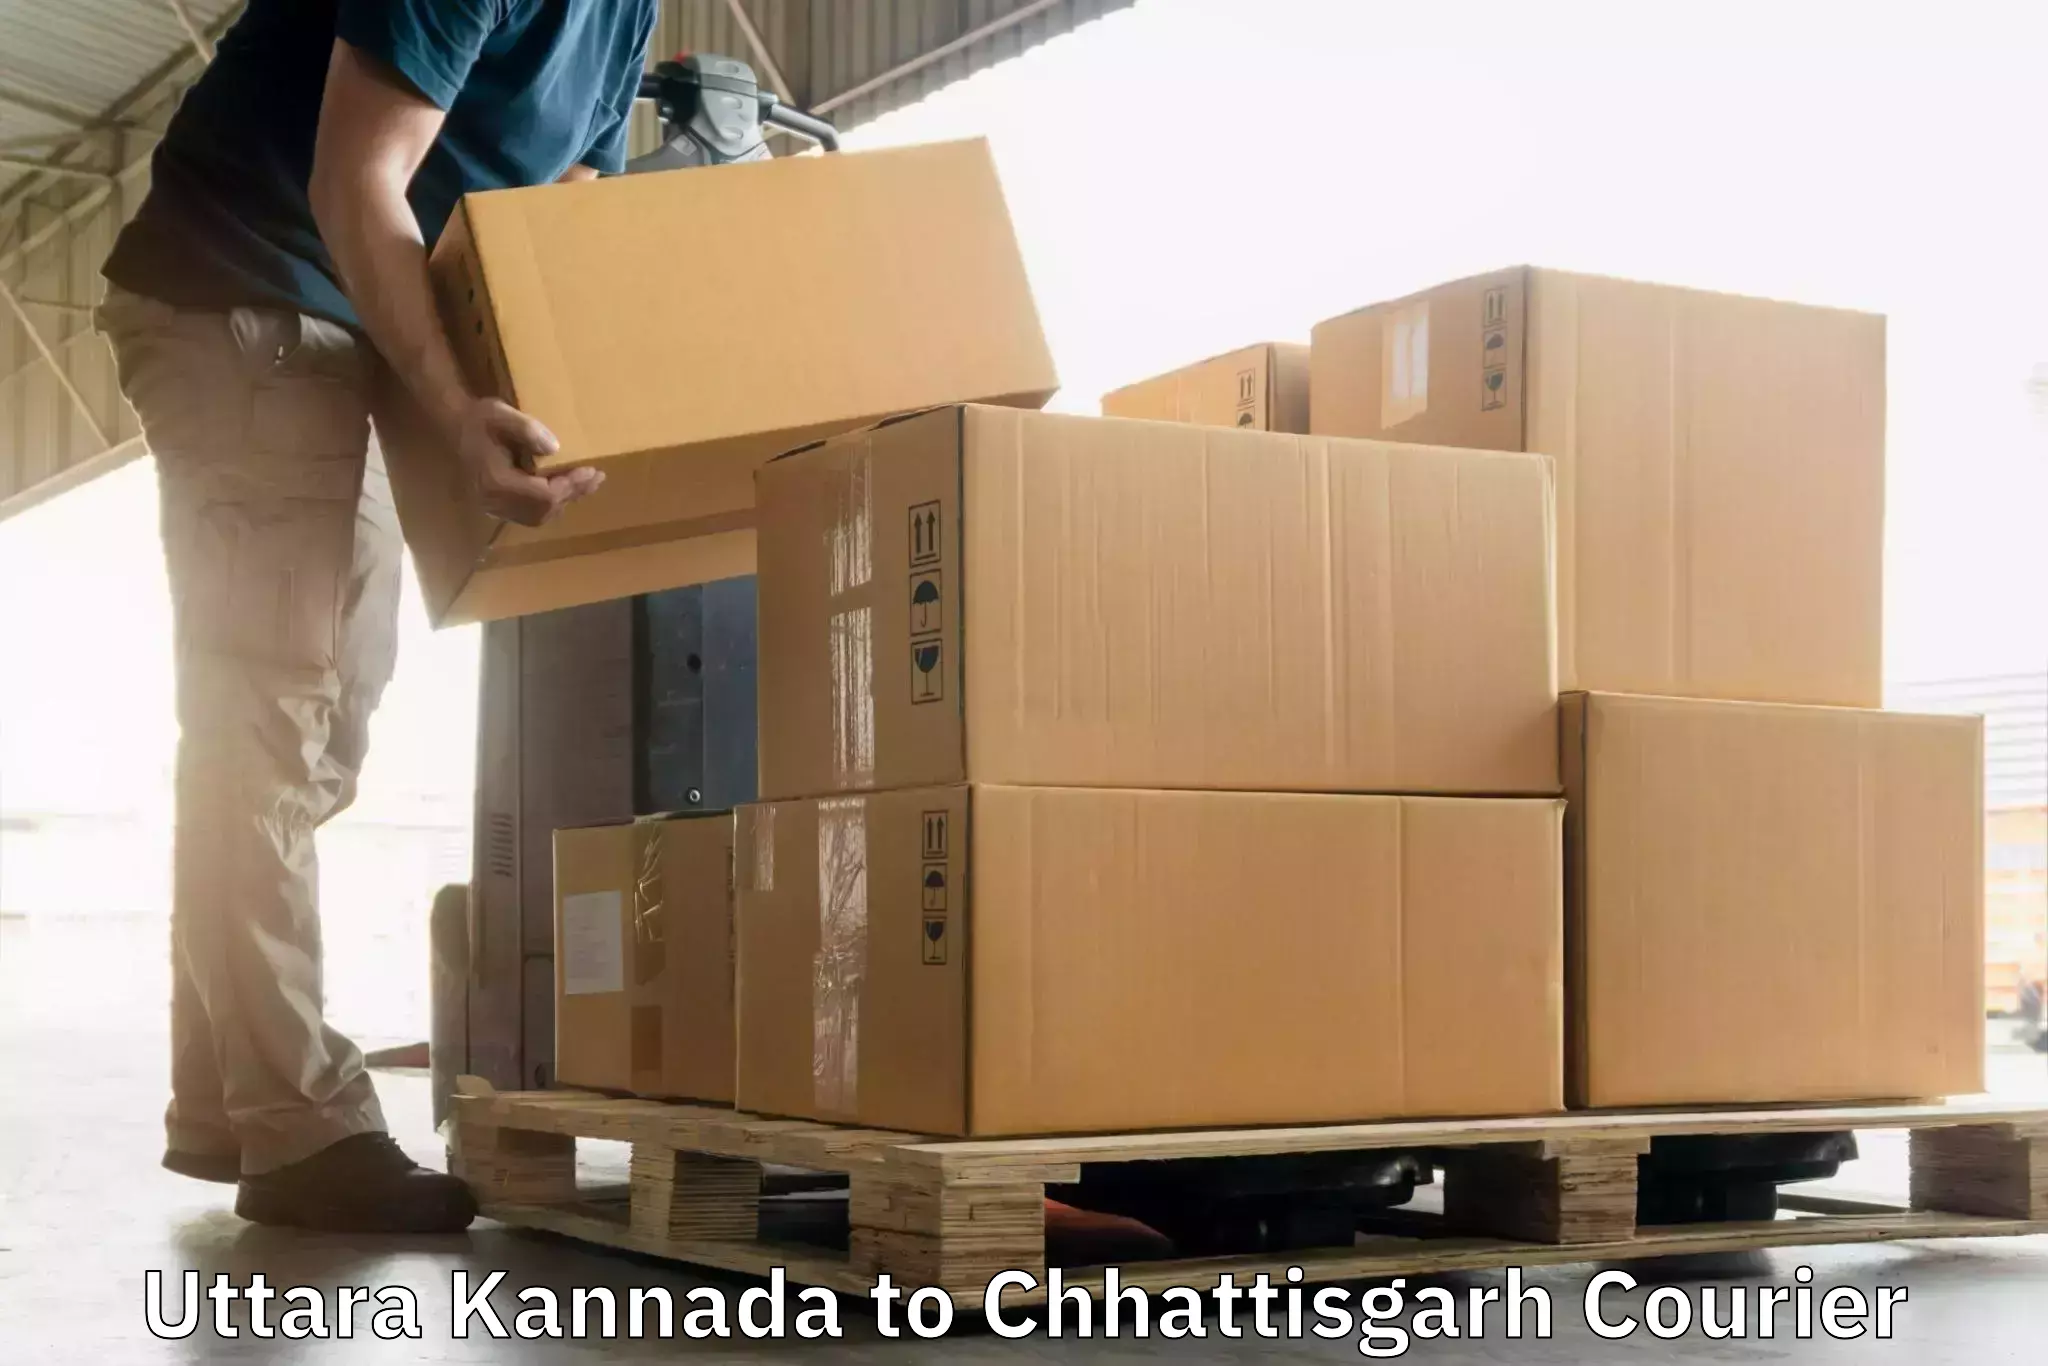 State-of-the-art courier technology Uttara Kannada to Bastar